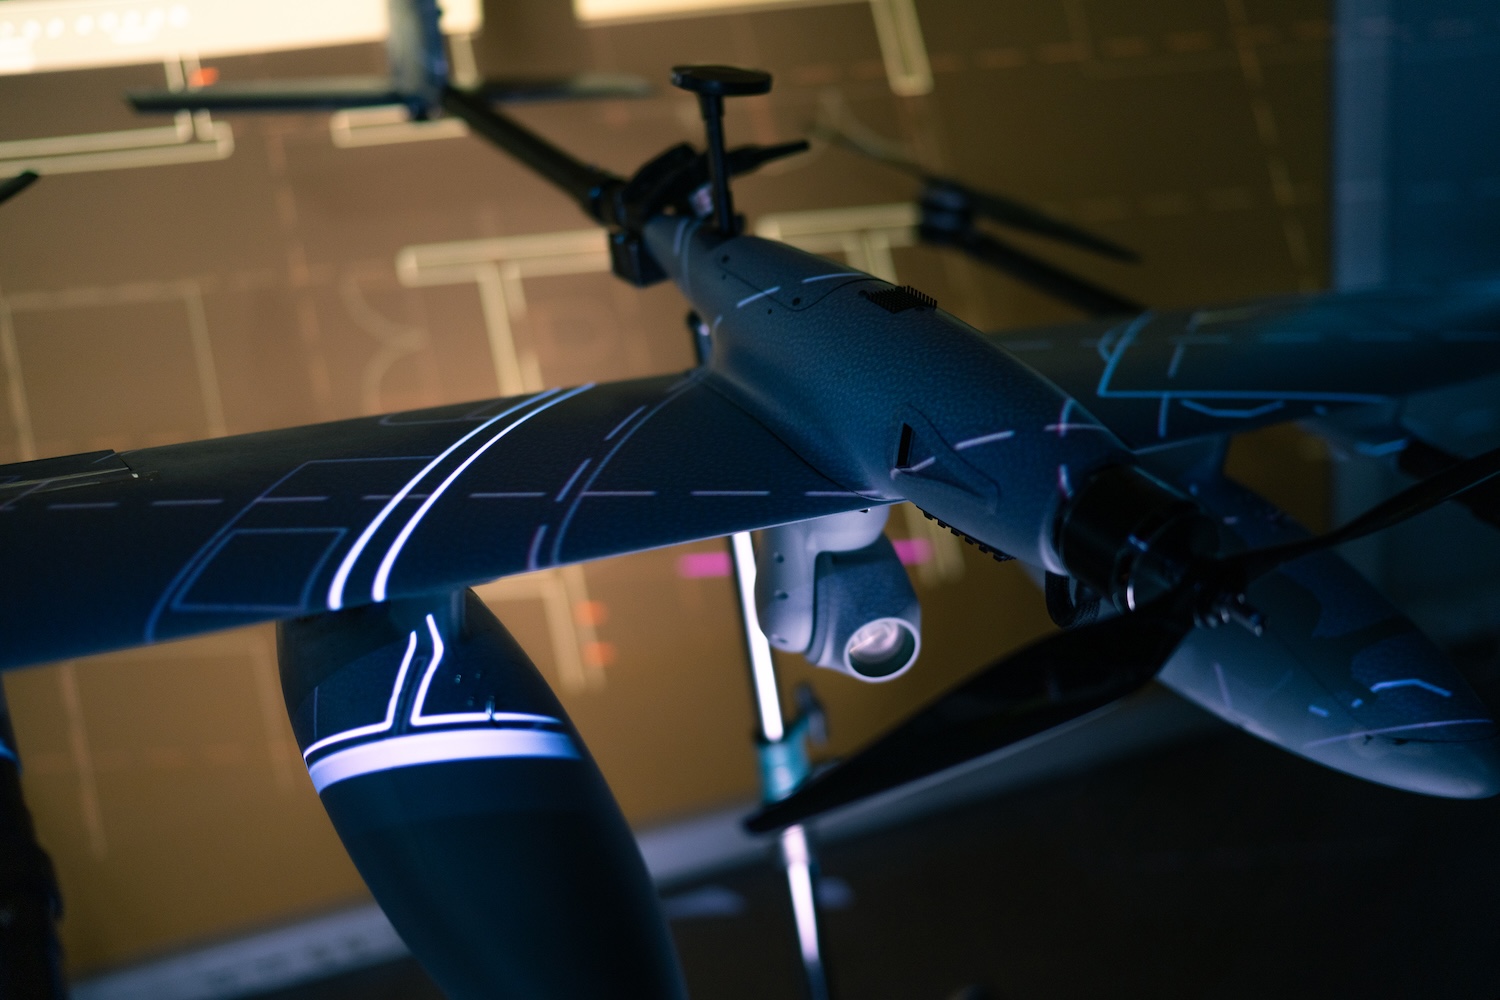 The Buntar Aerospace drone